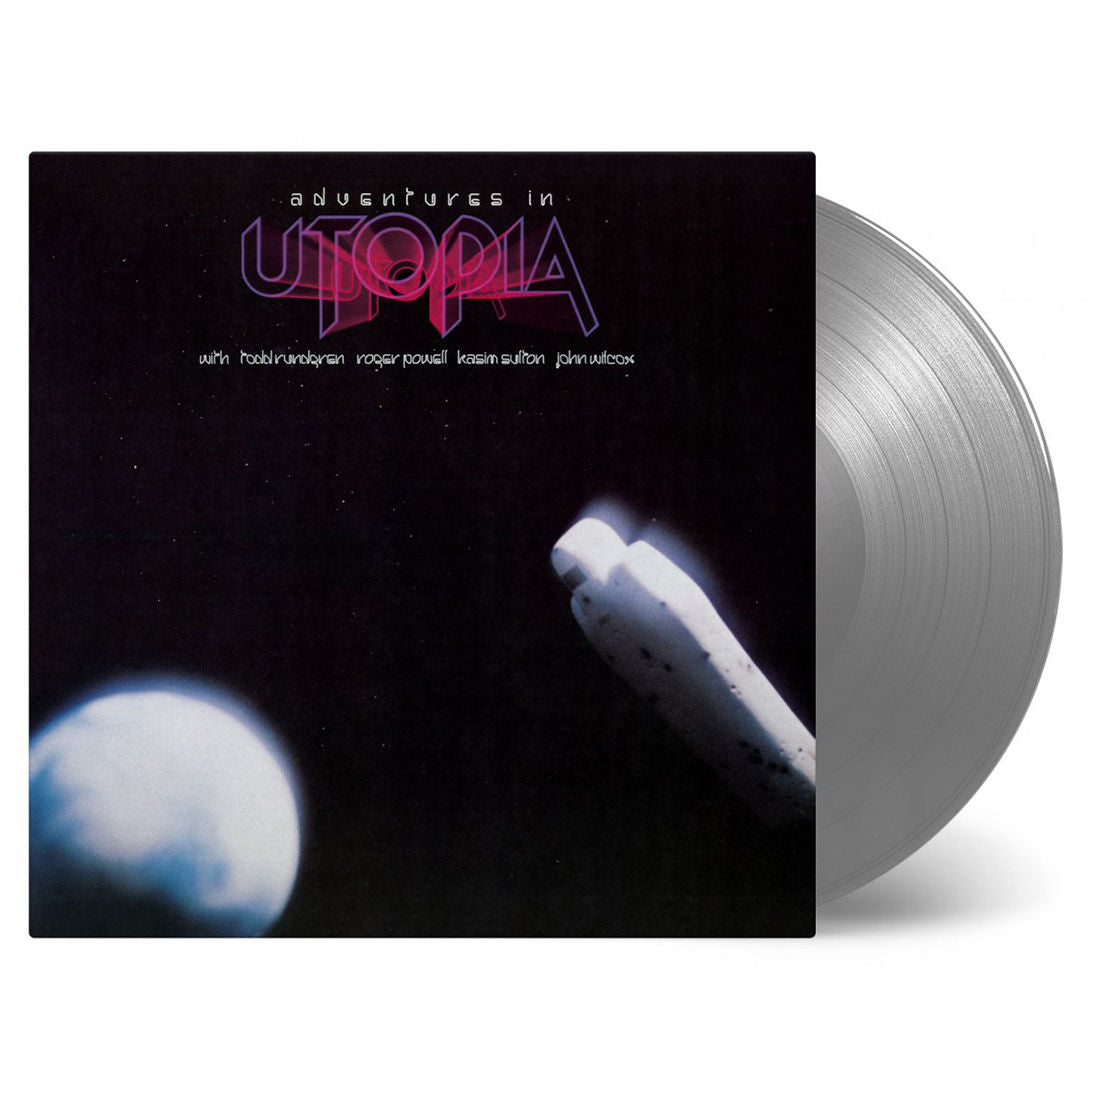 Utopia – Adventures In Utopia SILVER COLOURED VINYL NUMBERED 180 GRAM LP